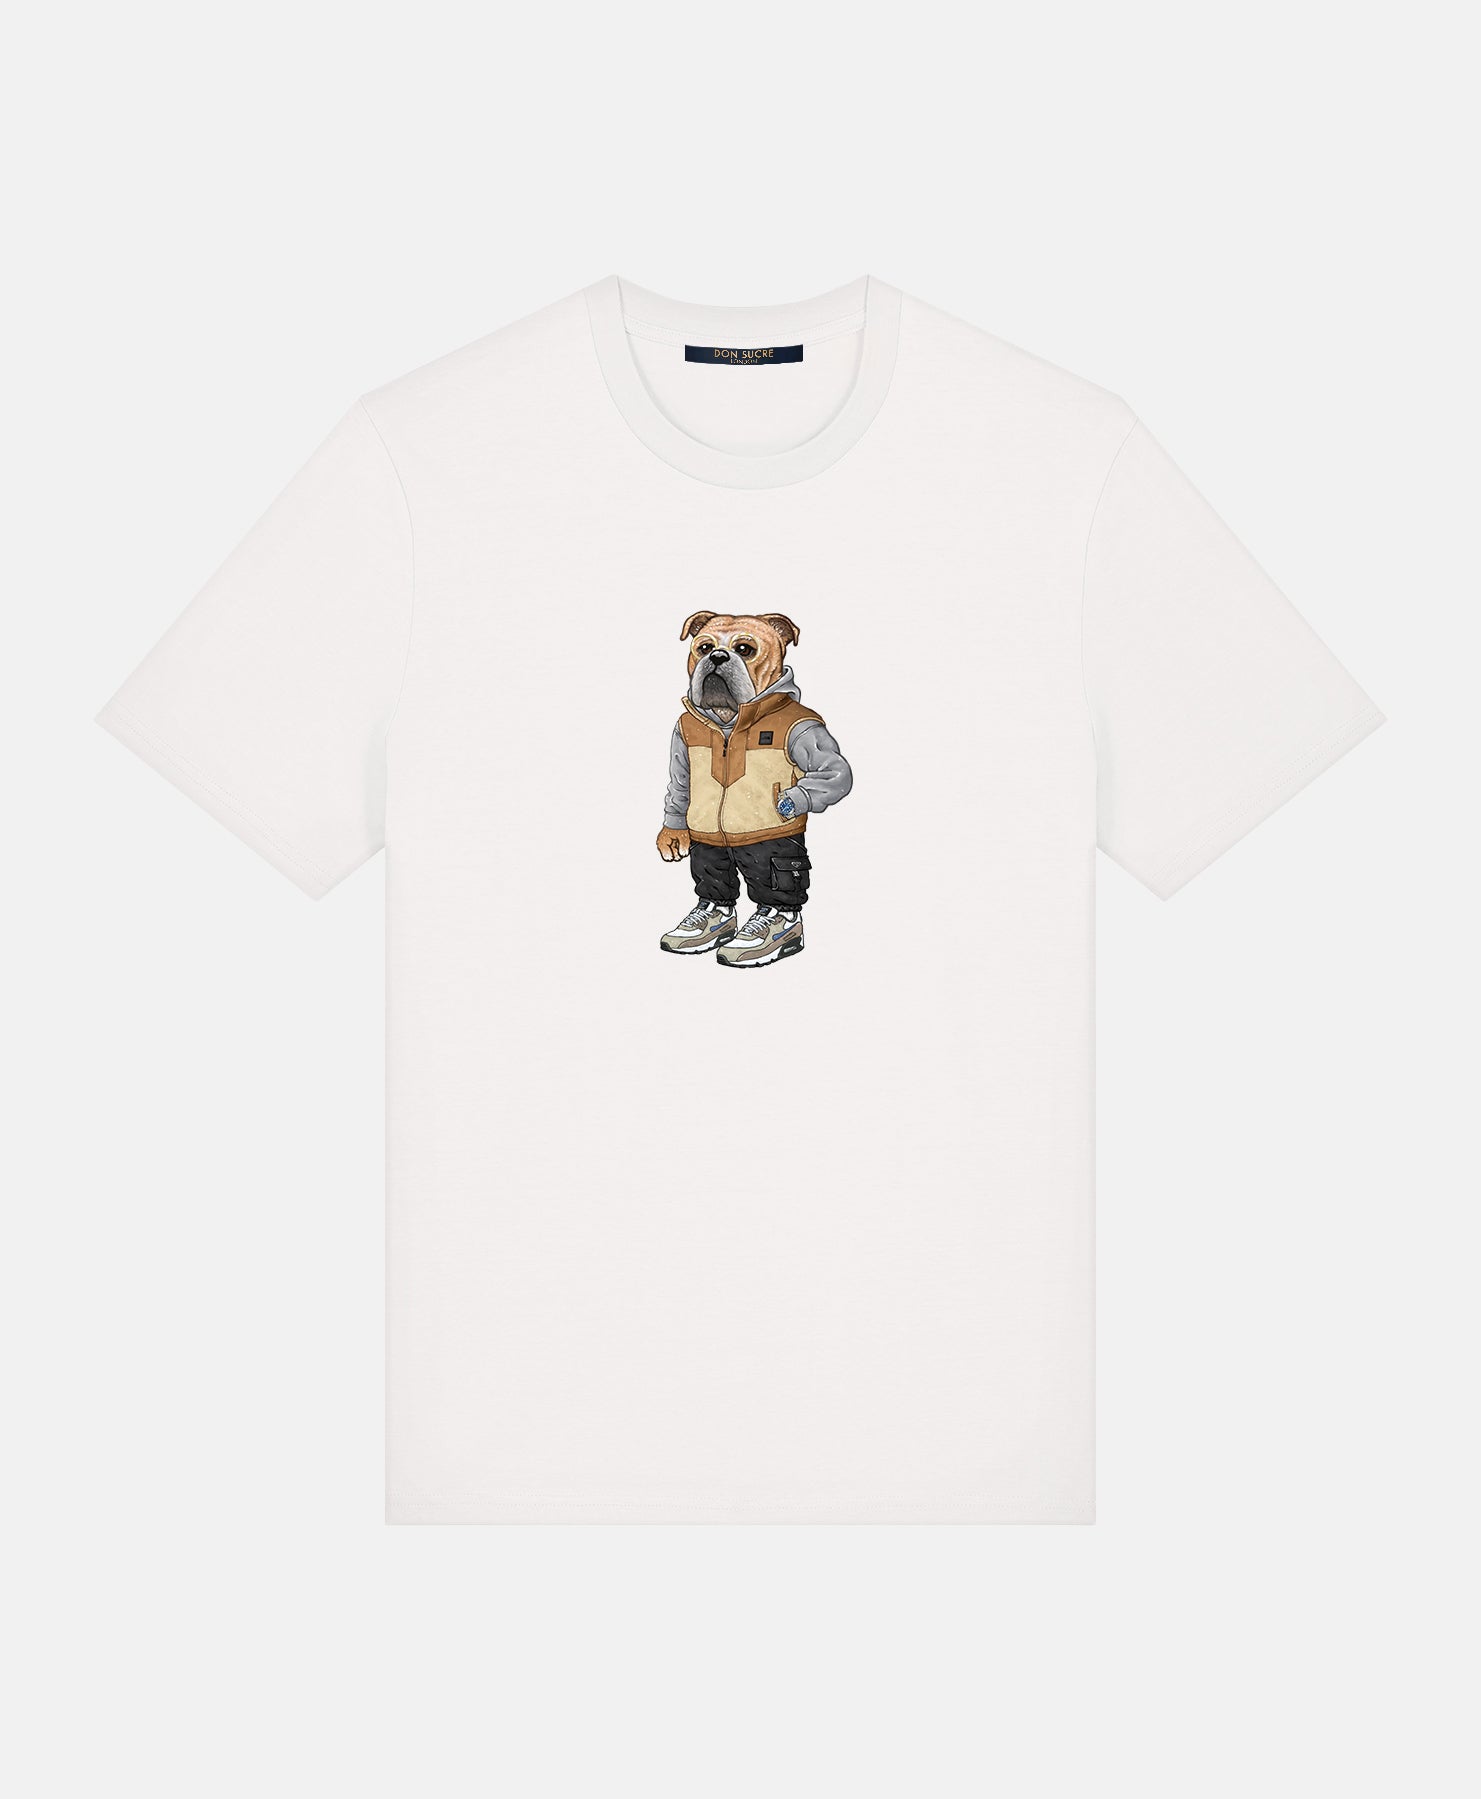 Bulldog "Lowkey" T-shirt